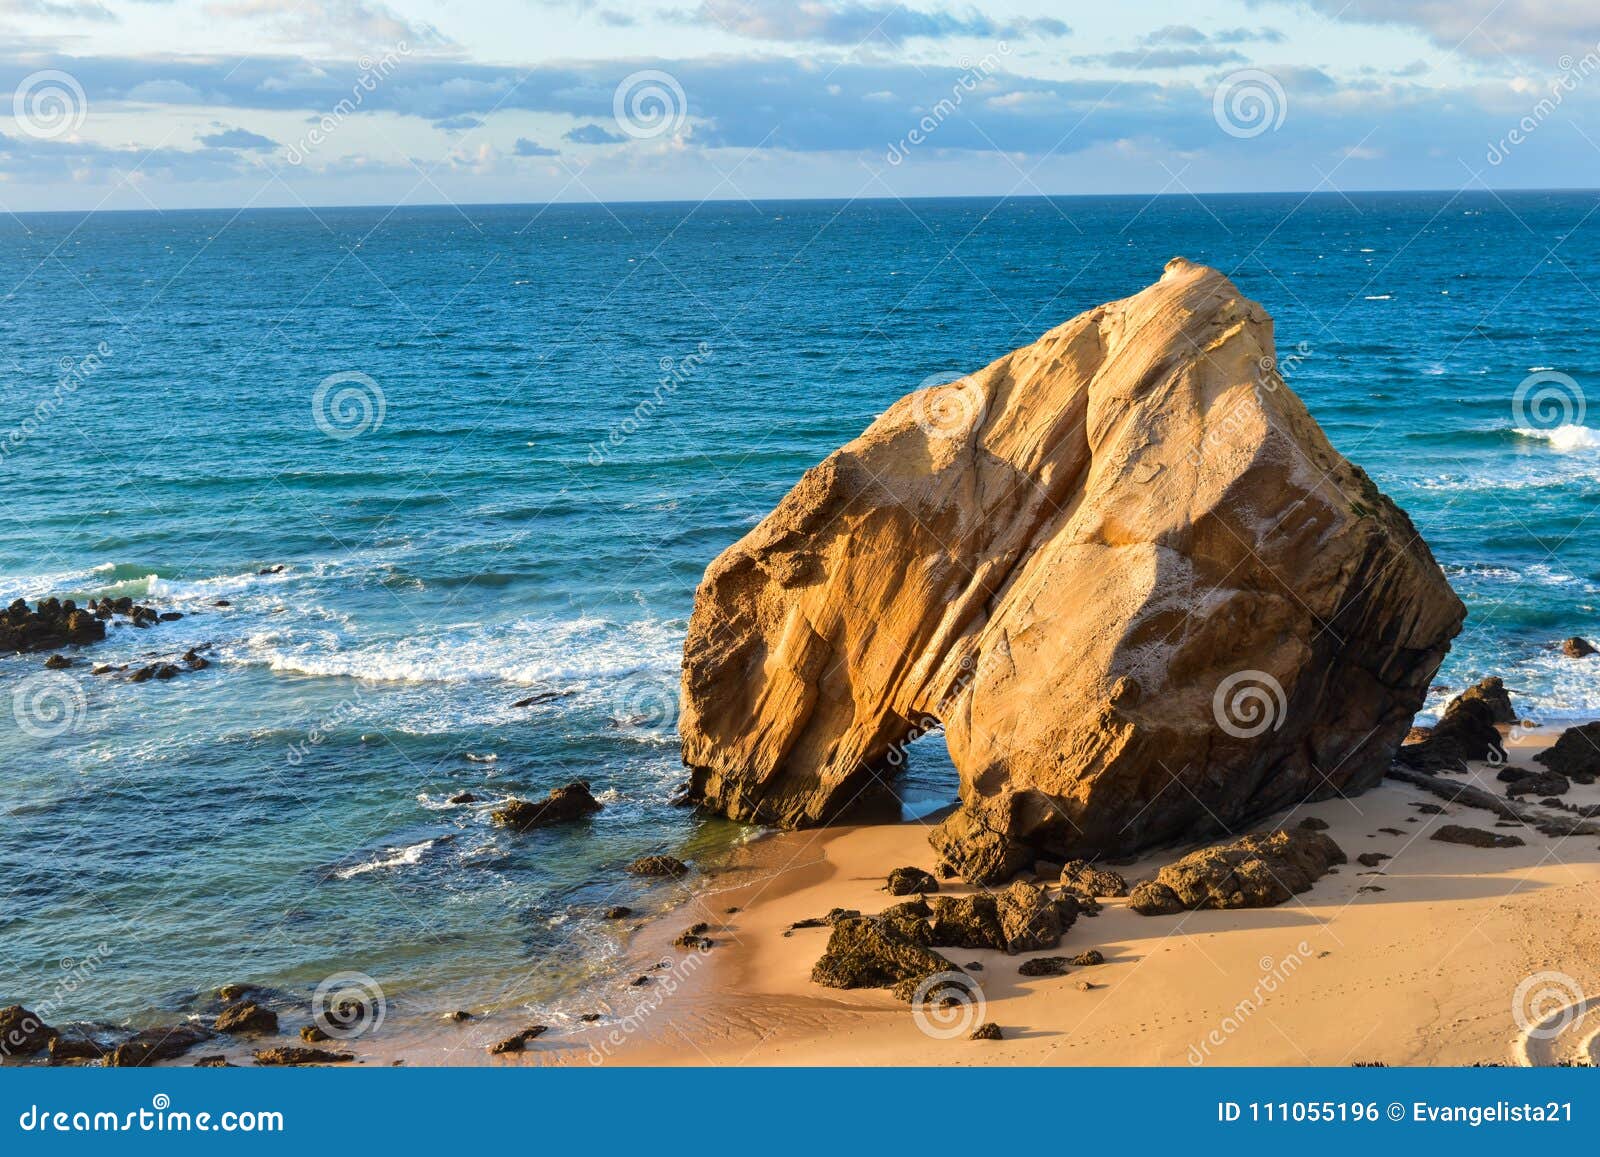 rock in the beach at santa cruz - portugal